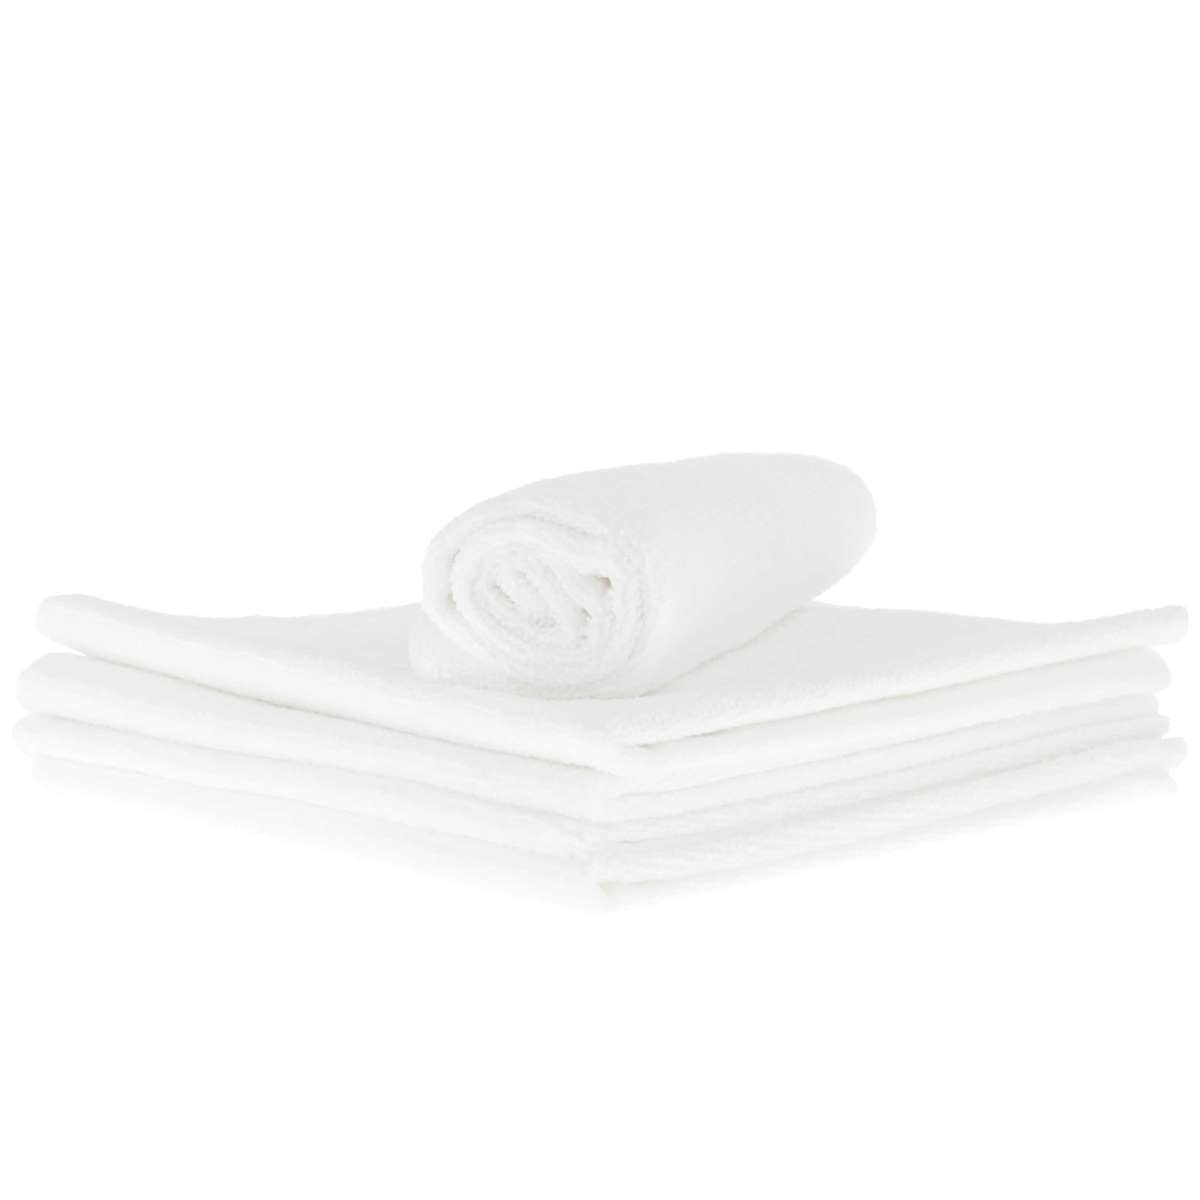 Senza Bordi Leggero Edgeless Coating Towel 45x45cm - 5-pack